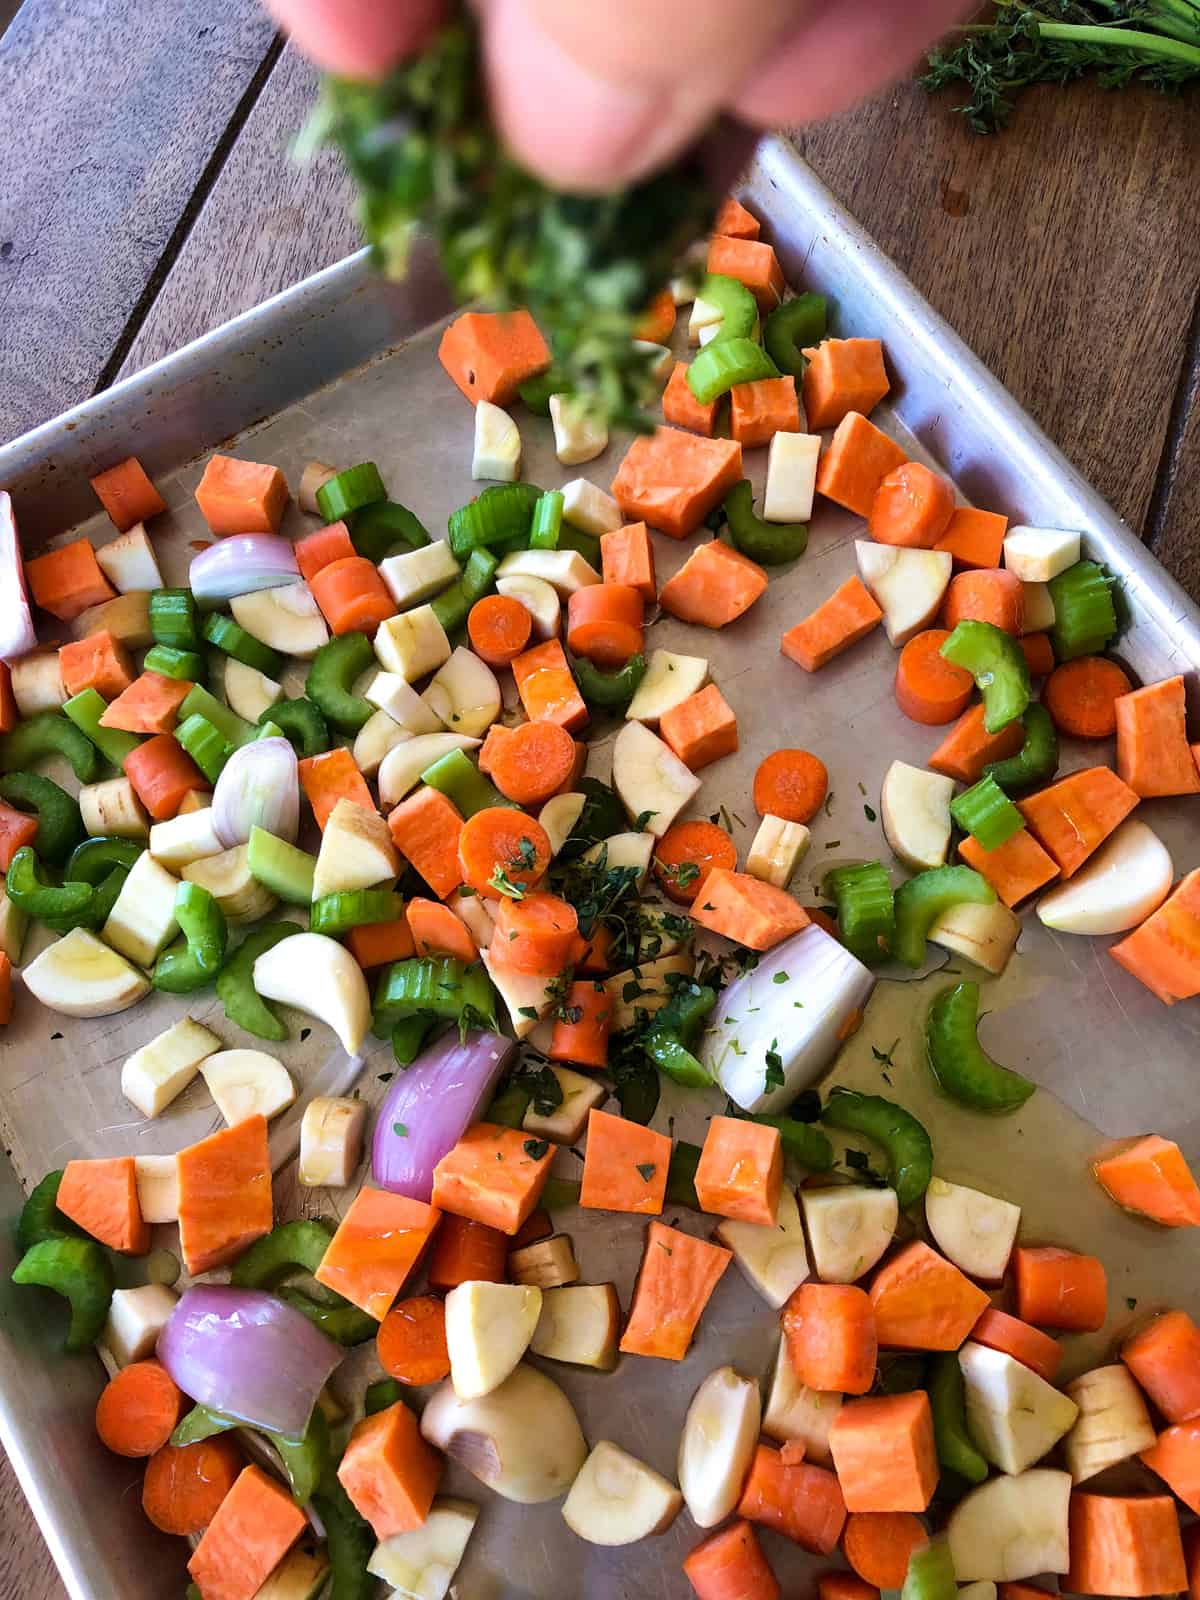 Sprinkle fresh thyme over chopped vegetables